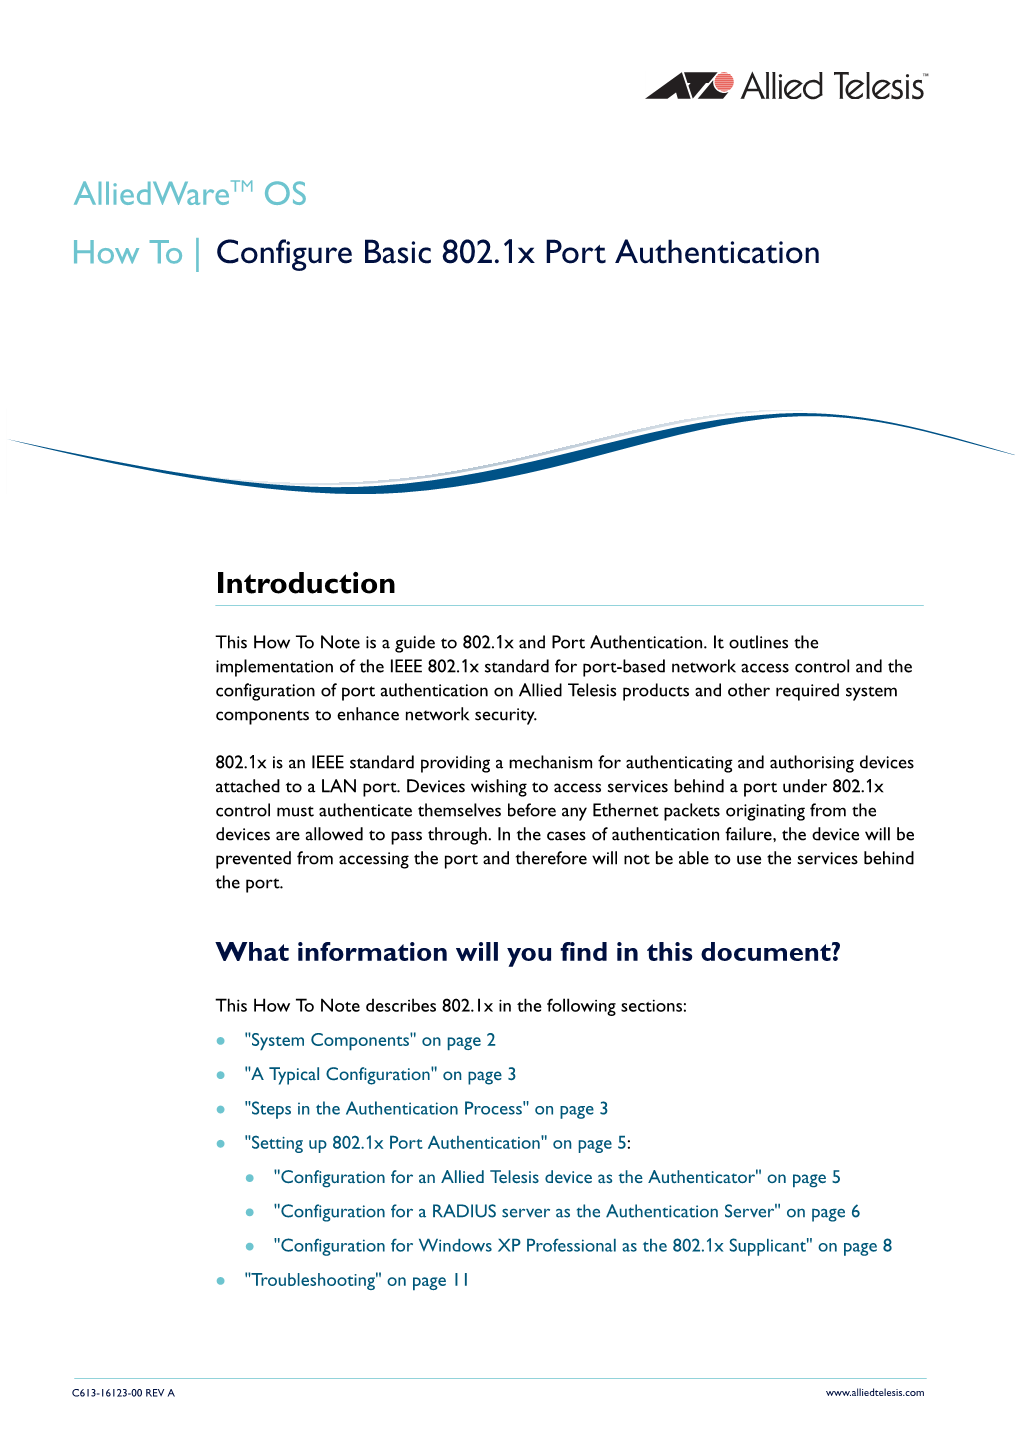 How to Configure Basic 802.1X Port Authentication